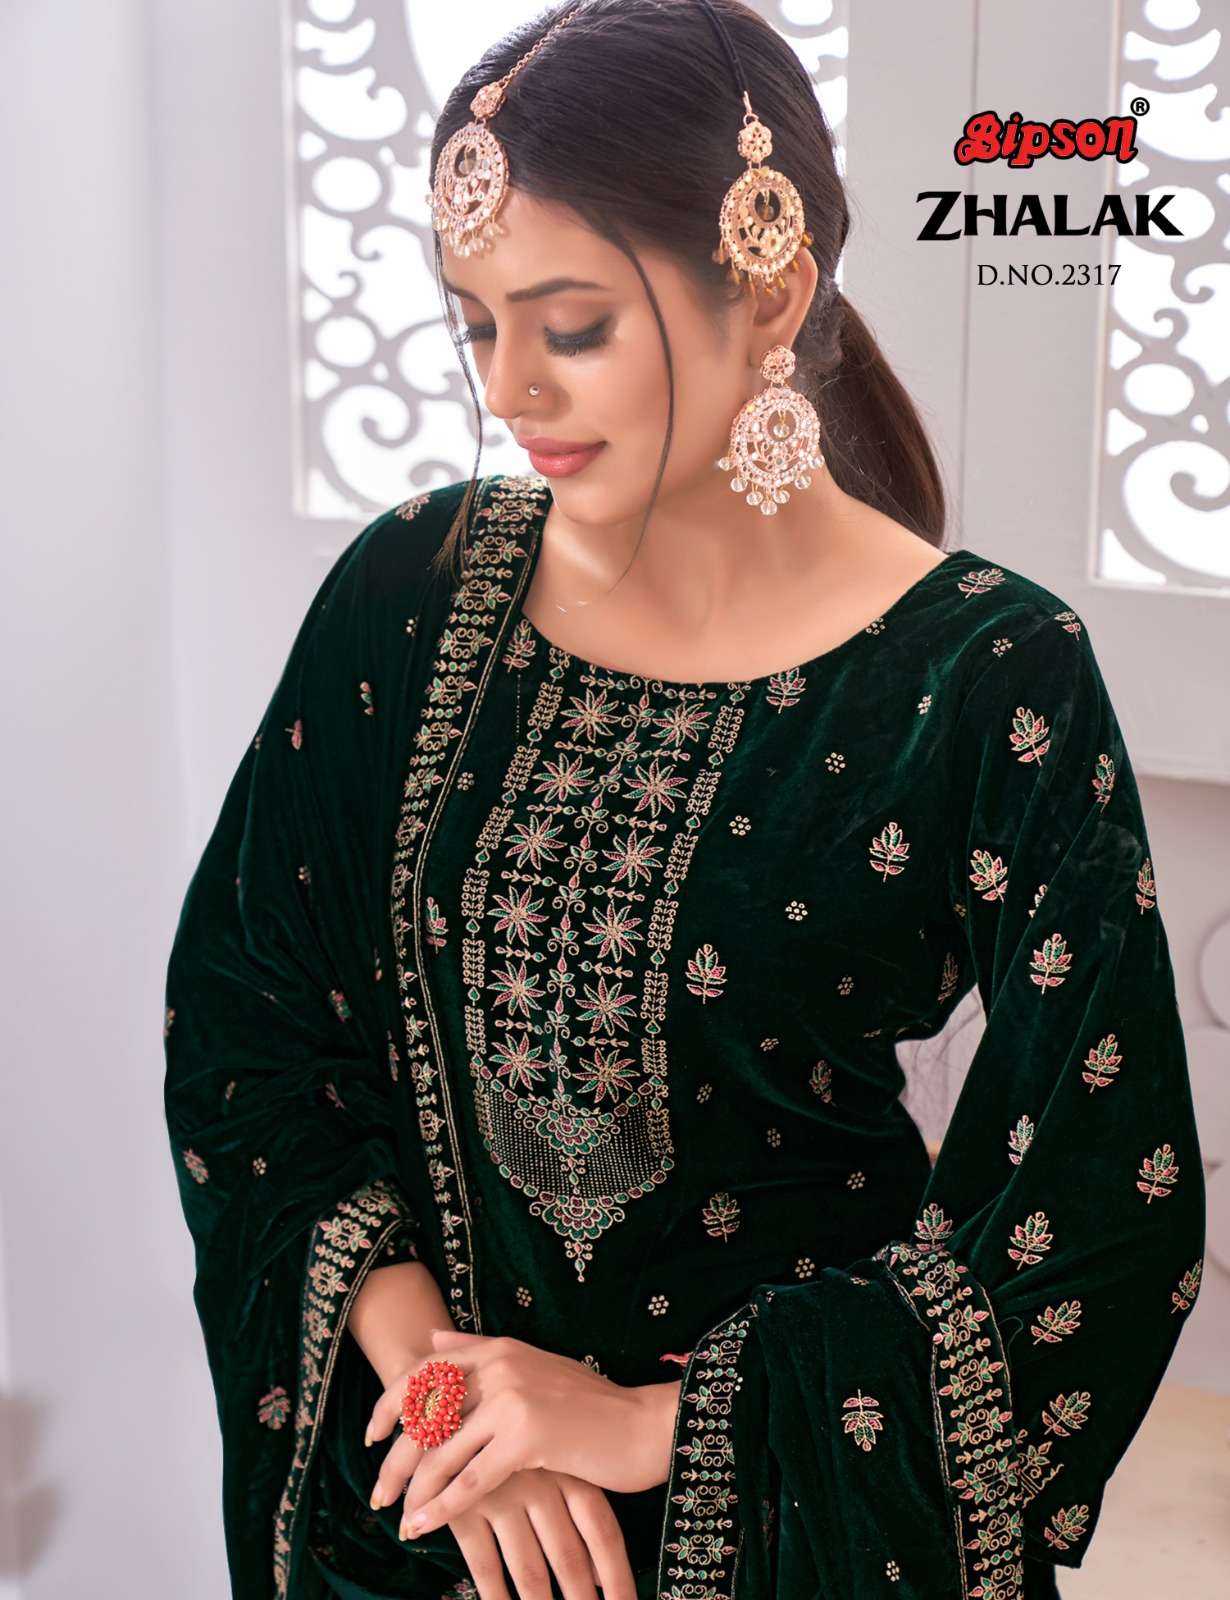 bipson zhalak 2316-2317-2318 winter premium velvet pakistani 3 peice dress material